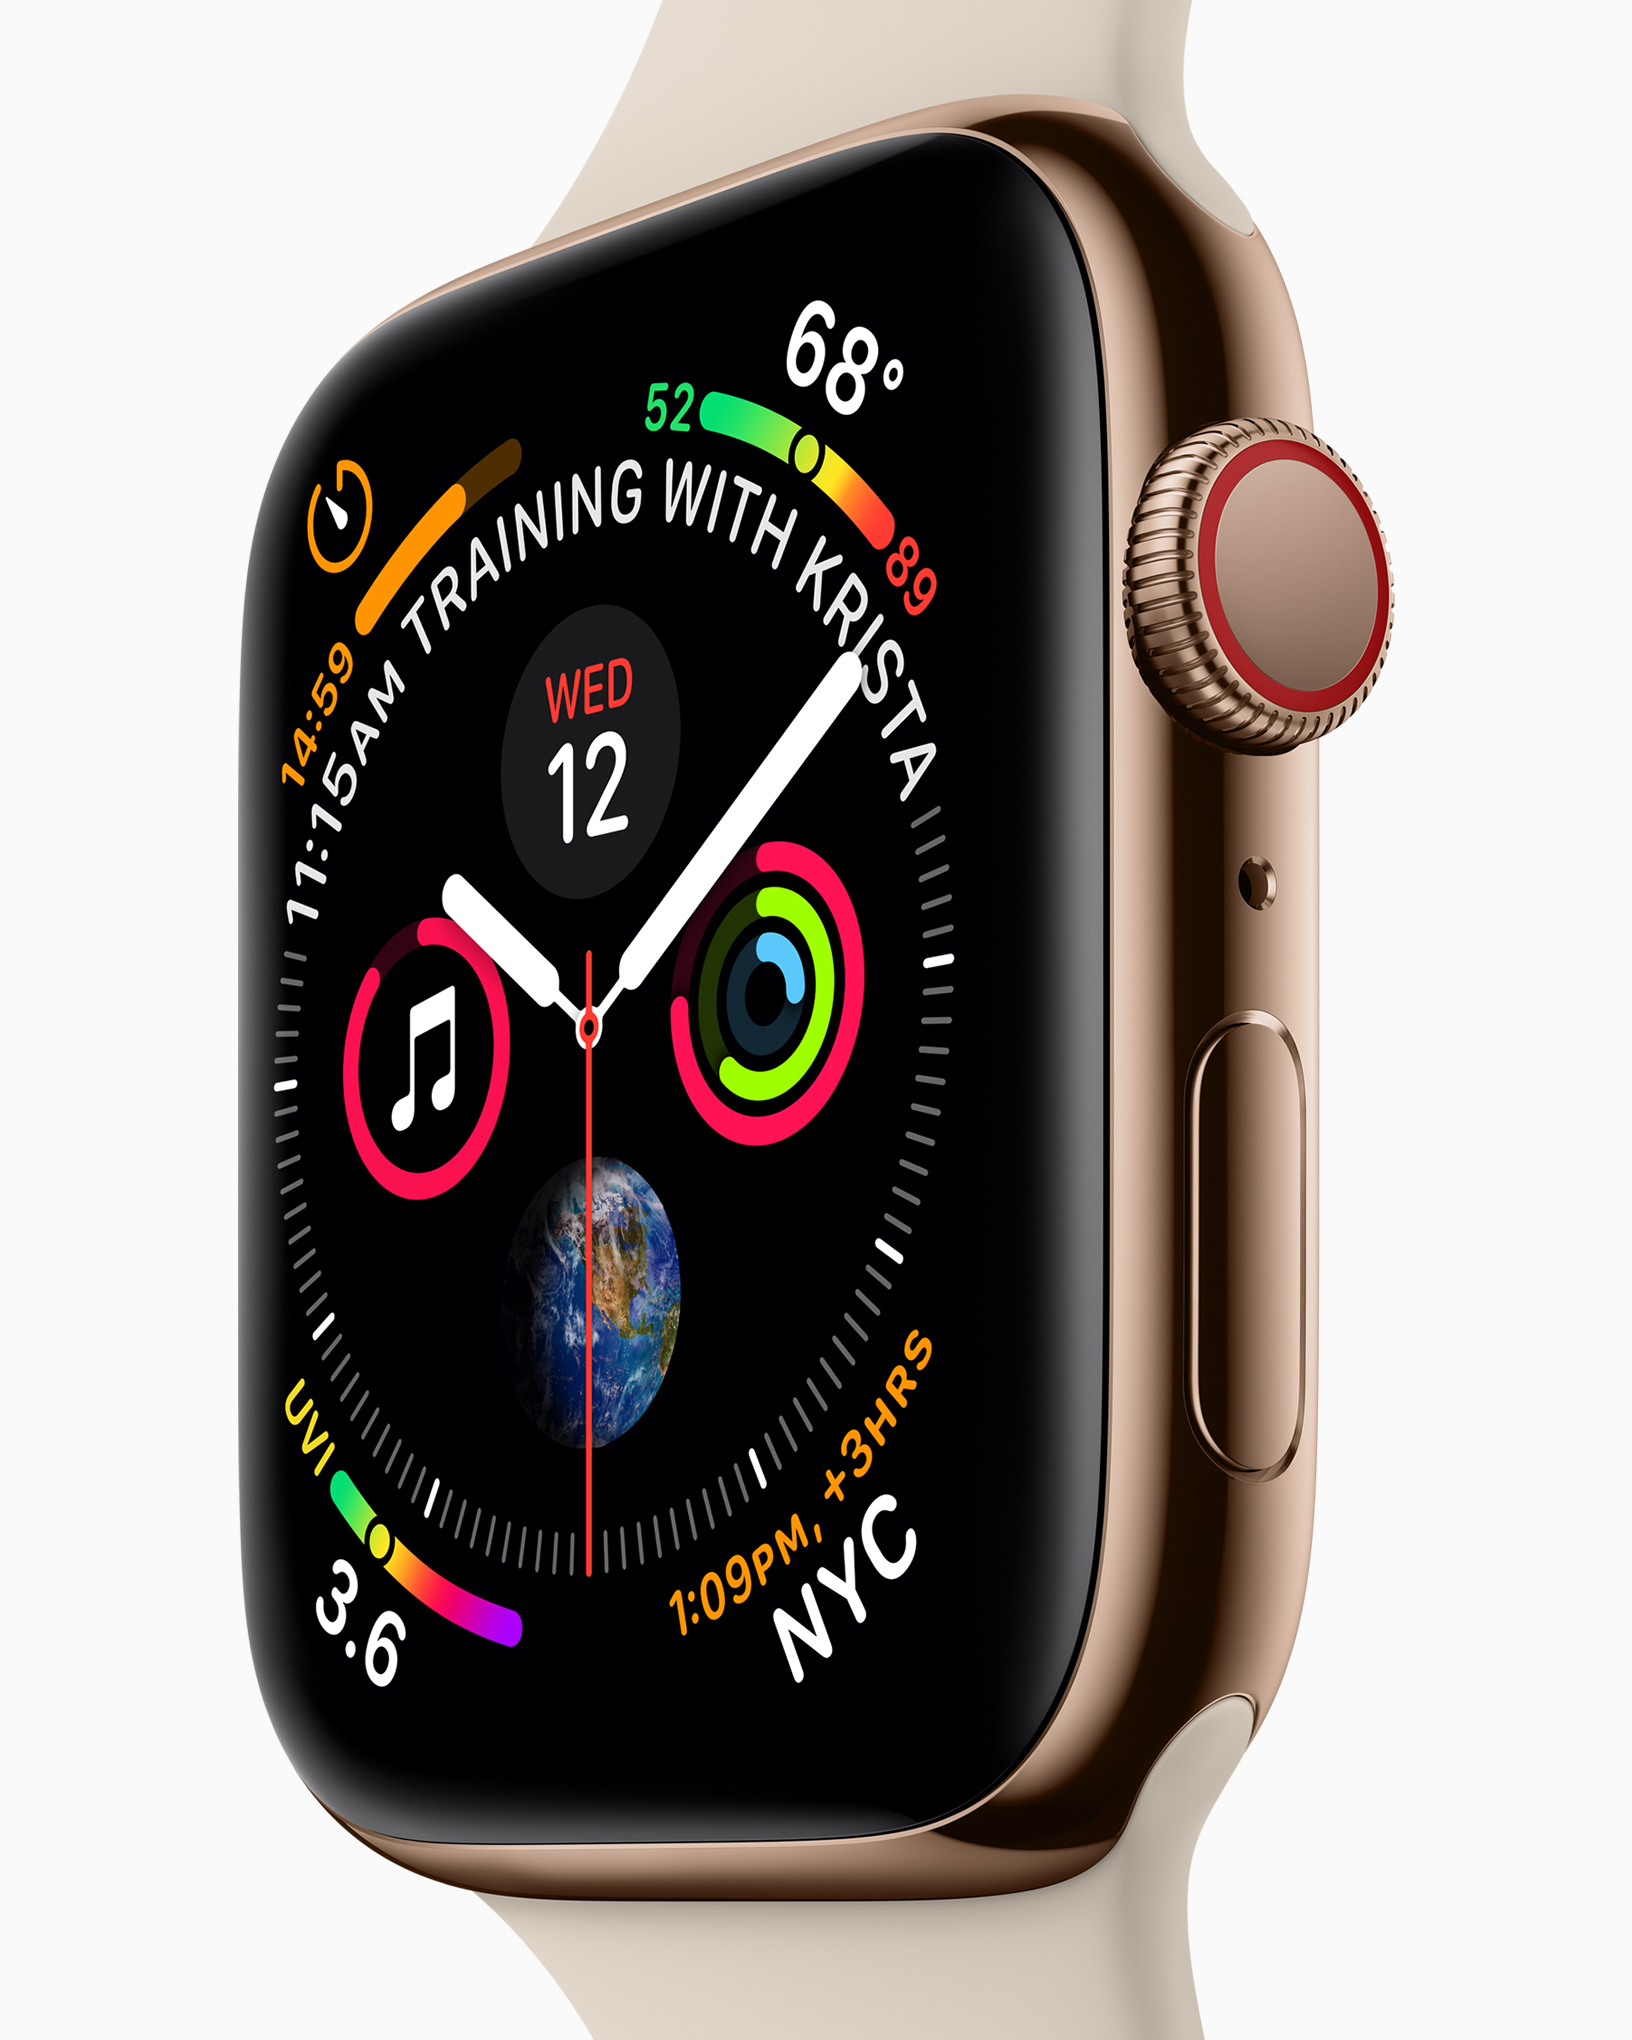 Redesigned Apple Watch Series 4 revolutionizes communication, fitness